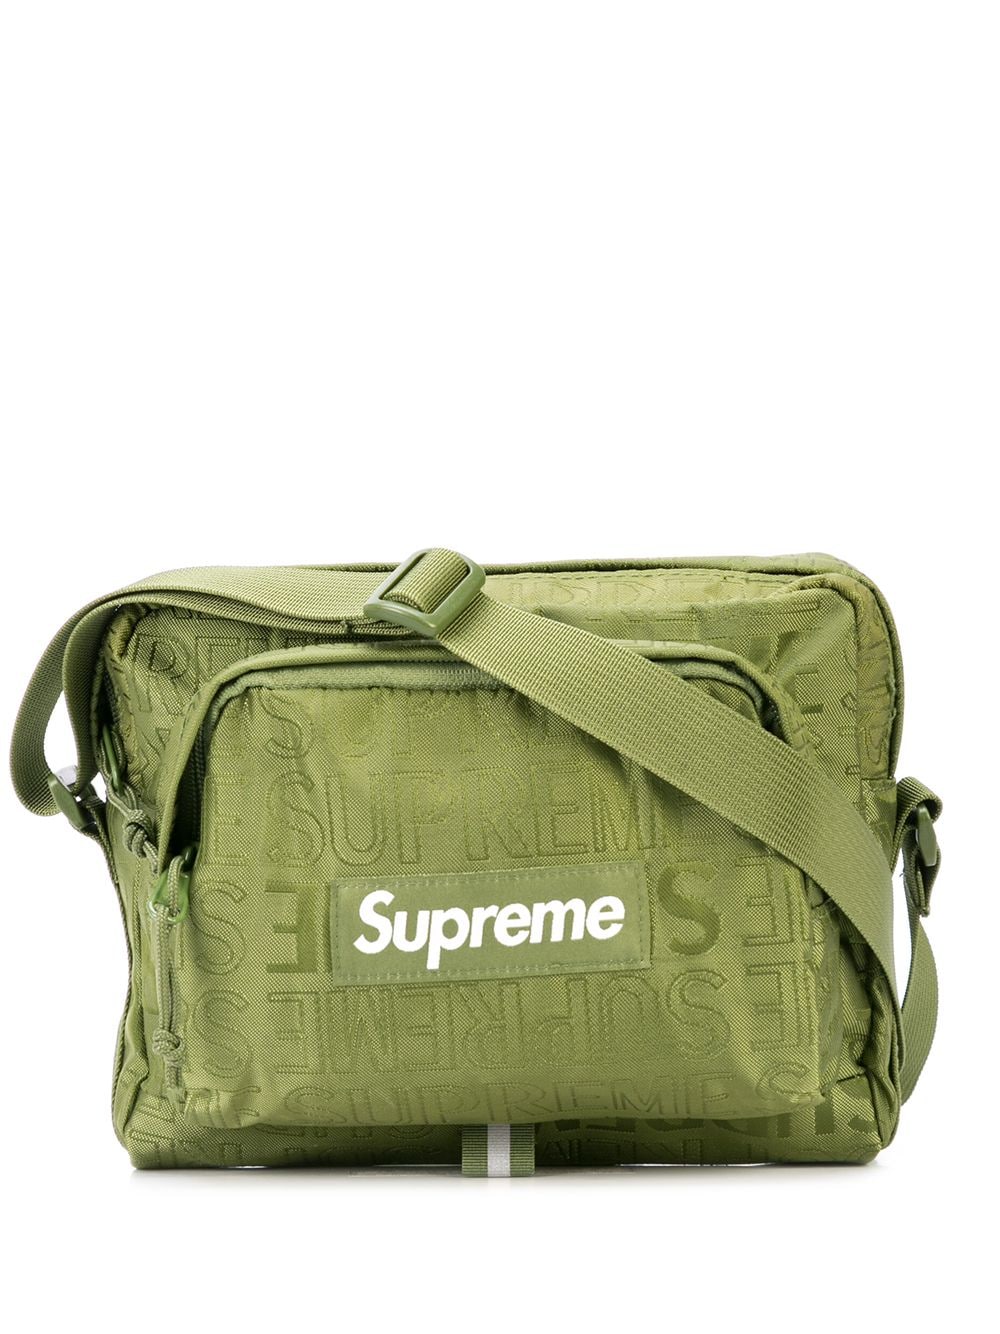 Supreme shoulder bag ss19 Condition : Brand new ของใหม่ Price